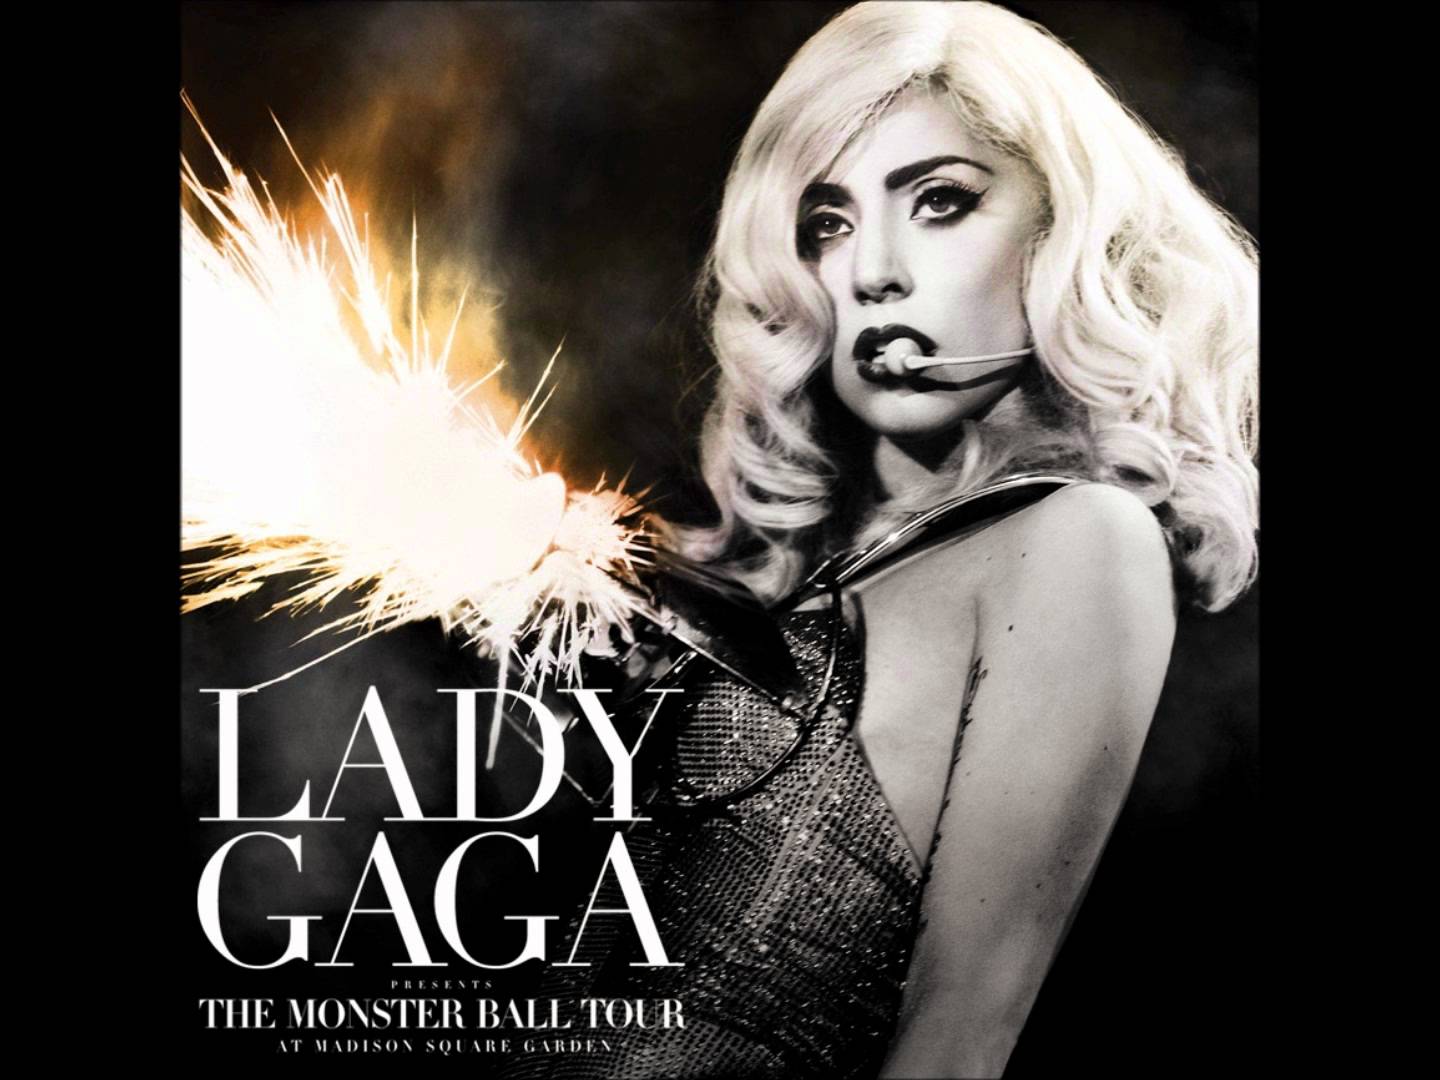 Judas lady gaga slowed. Lady Gaga presents: the Monster Ball Tour at Madison Square Garden. Lady Gaga the Monster Ball Tour. Леди Гага the Fame Monster. Lady Gaga LOVEGAME.